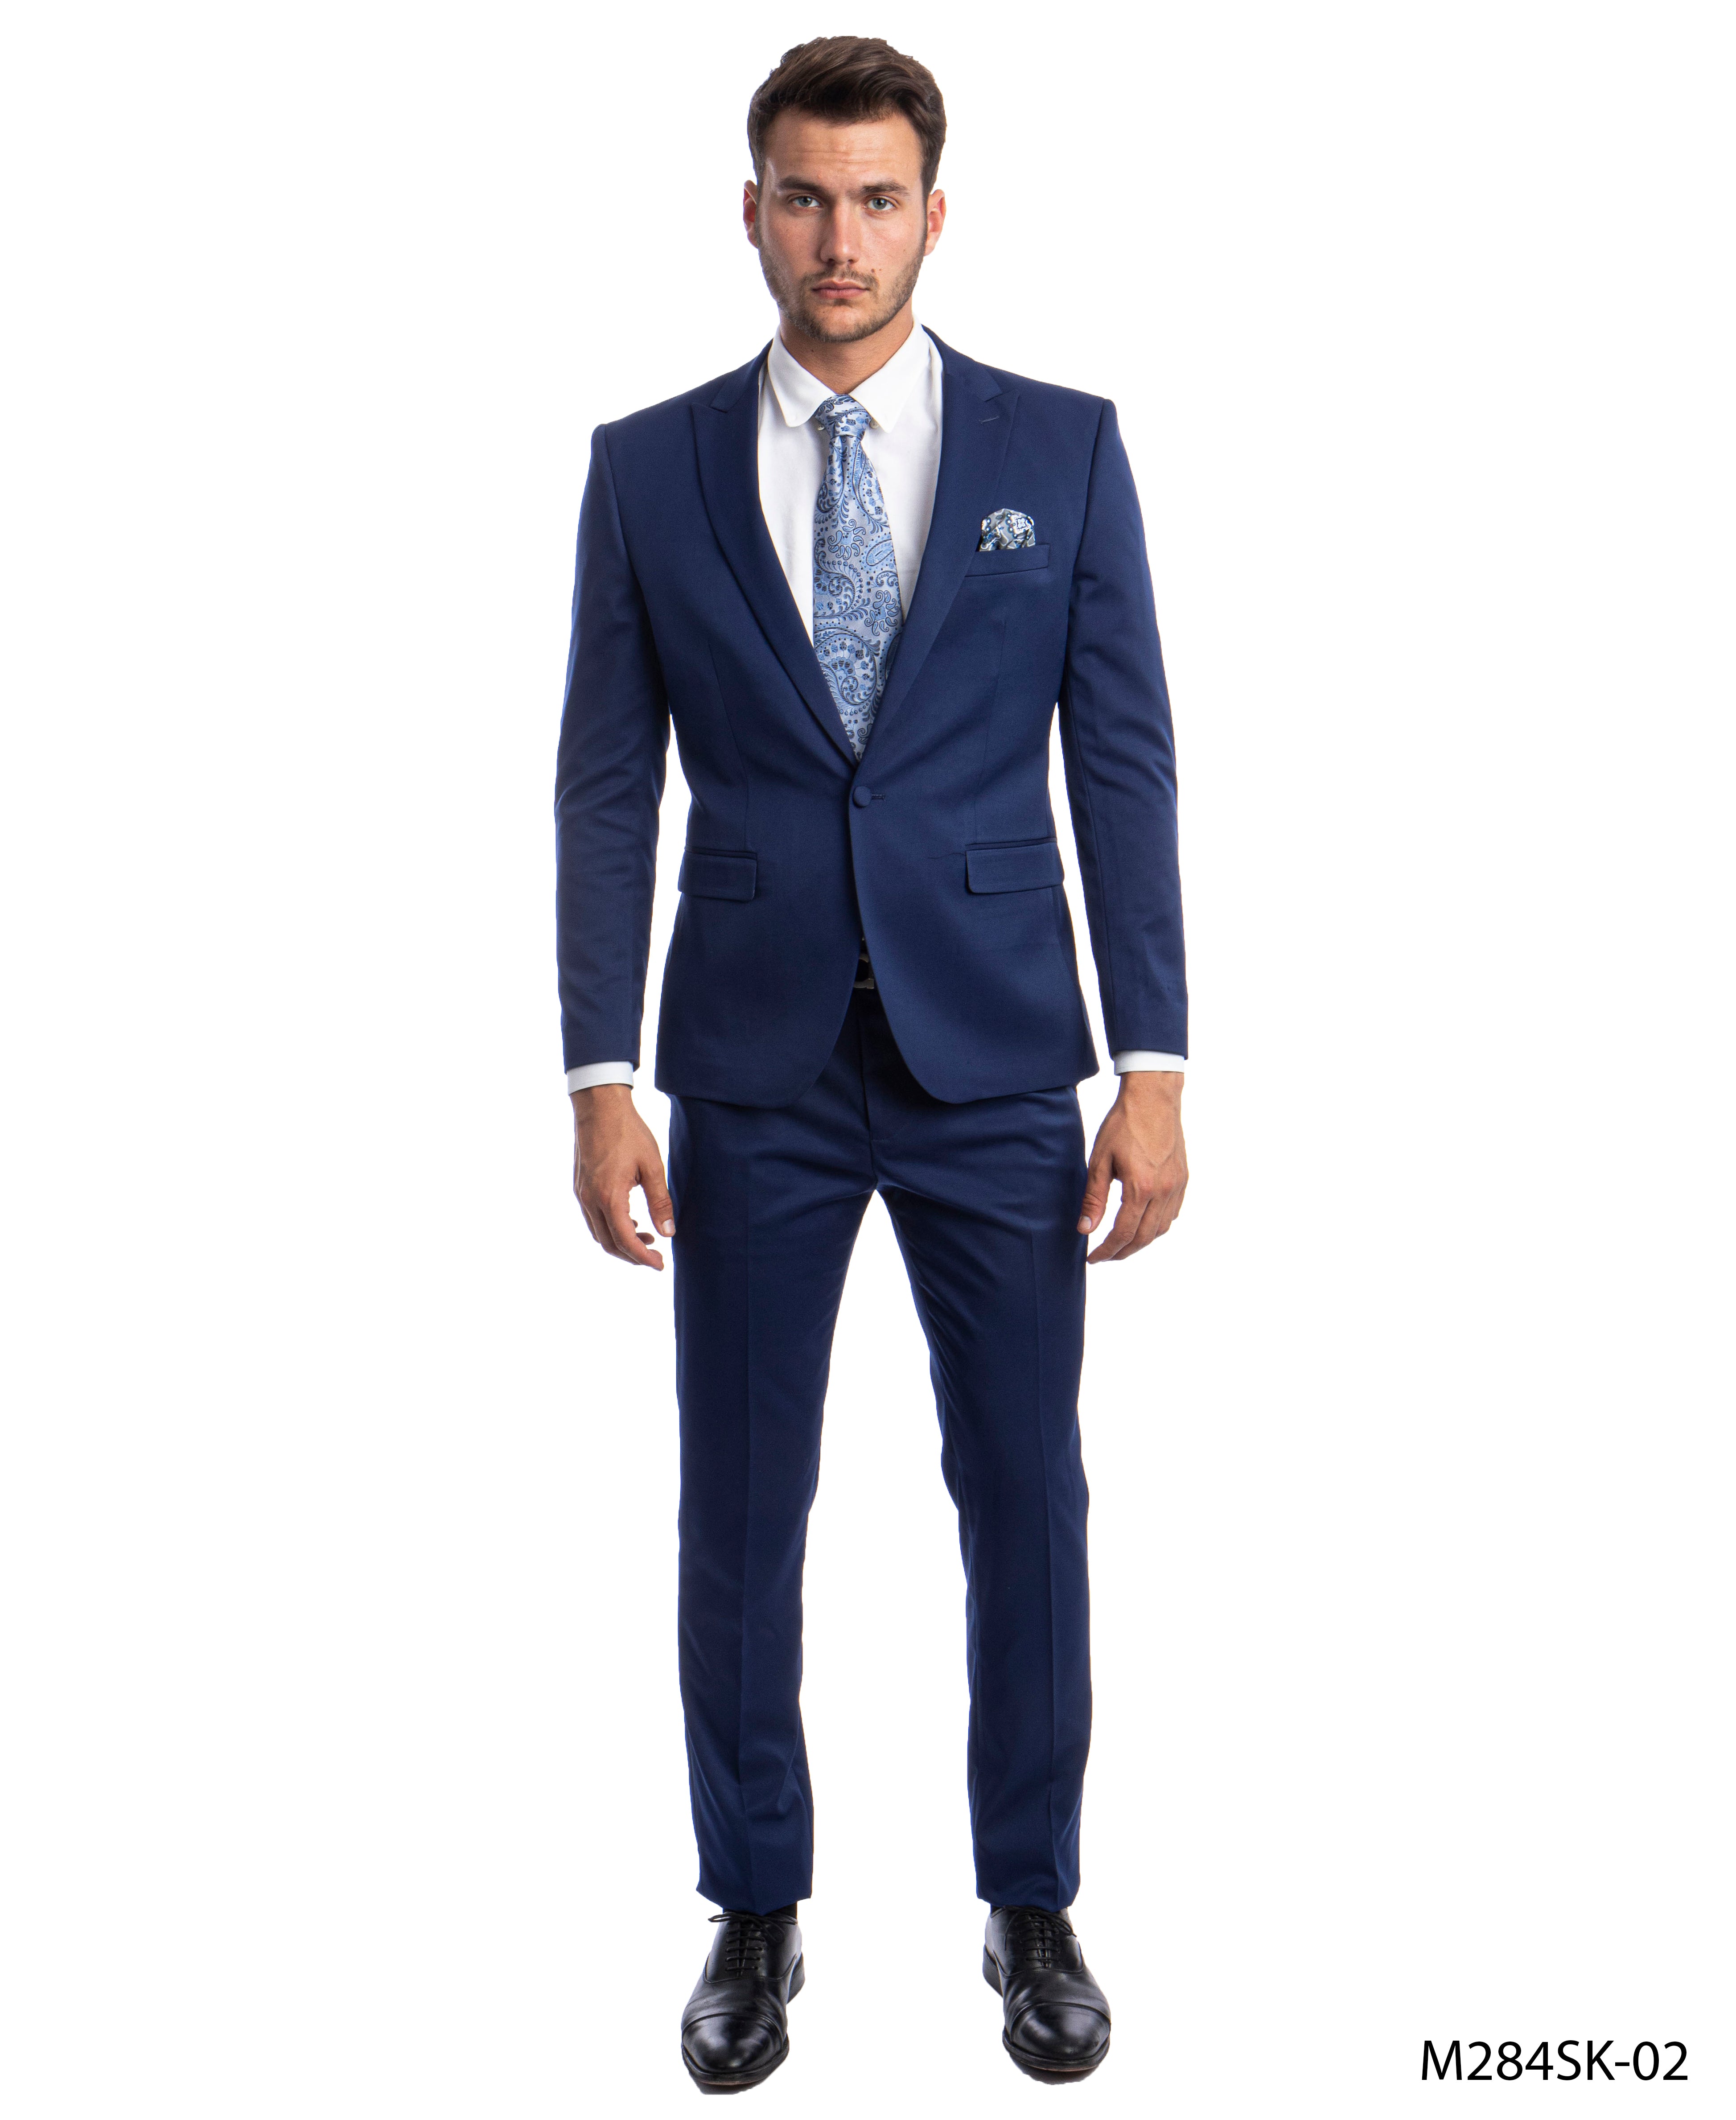 Dk.Blue Suit For Men Formal Suits For All Ocassions